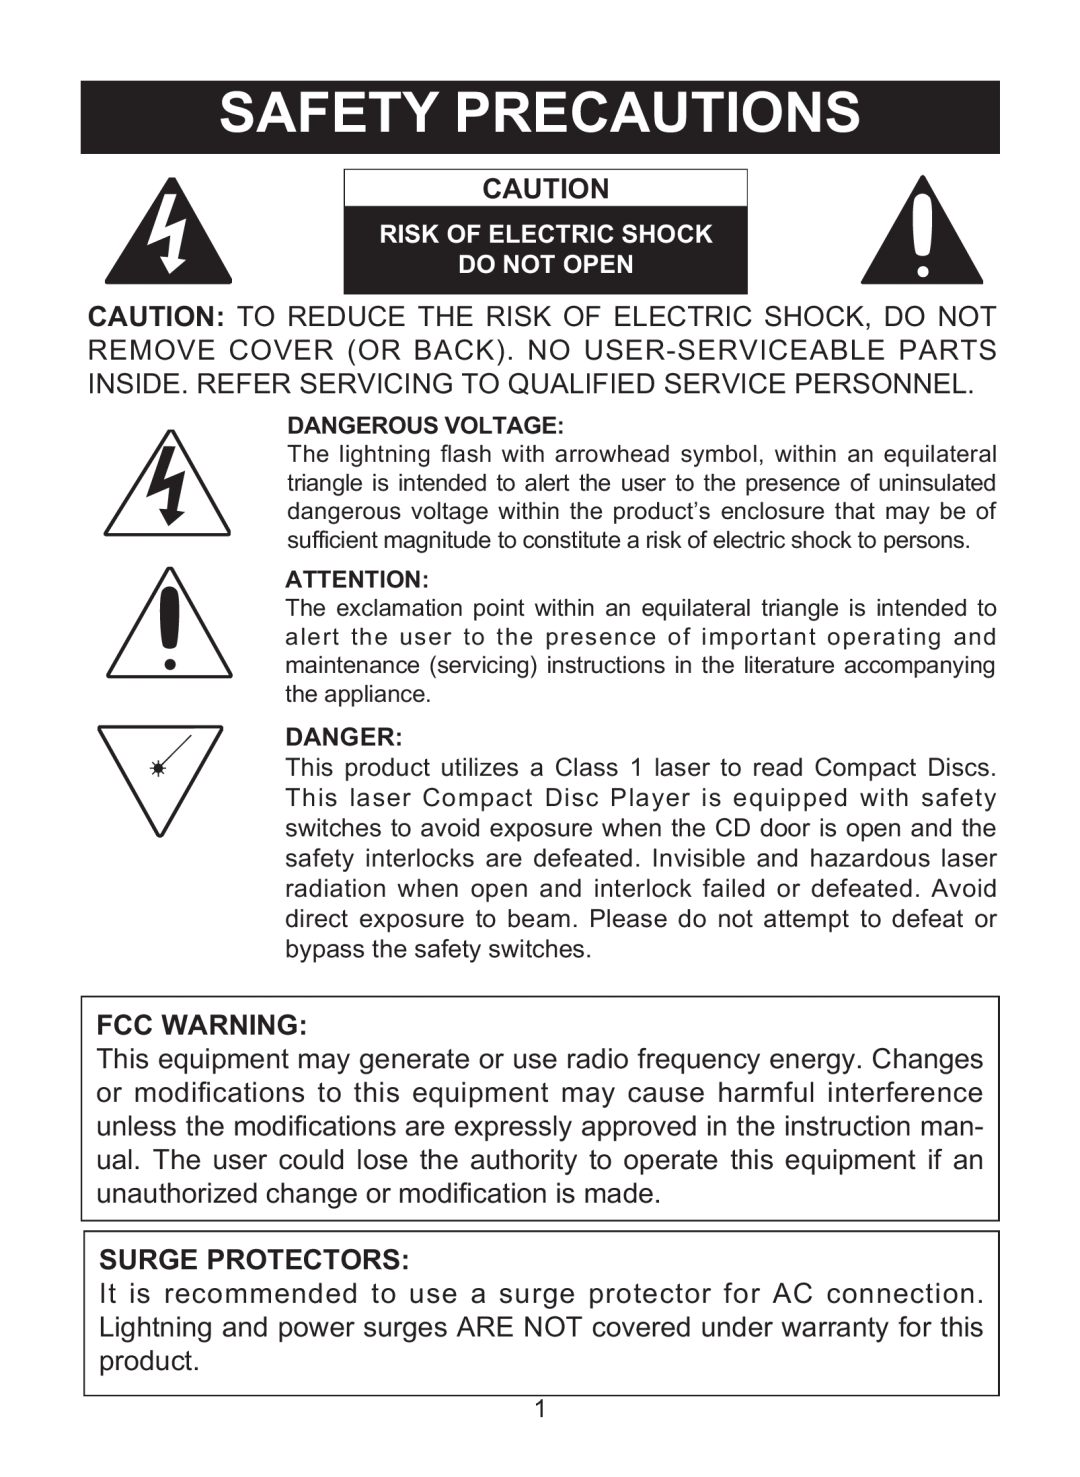 Memorex MD6460 manual Safety Precautions, Fcc Warning, Surge Protectors 